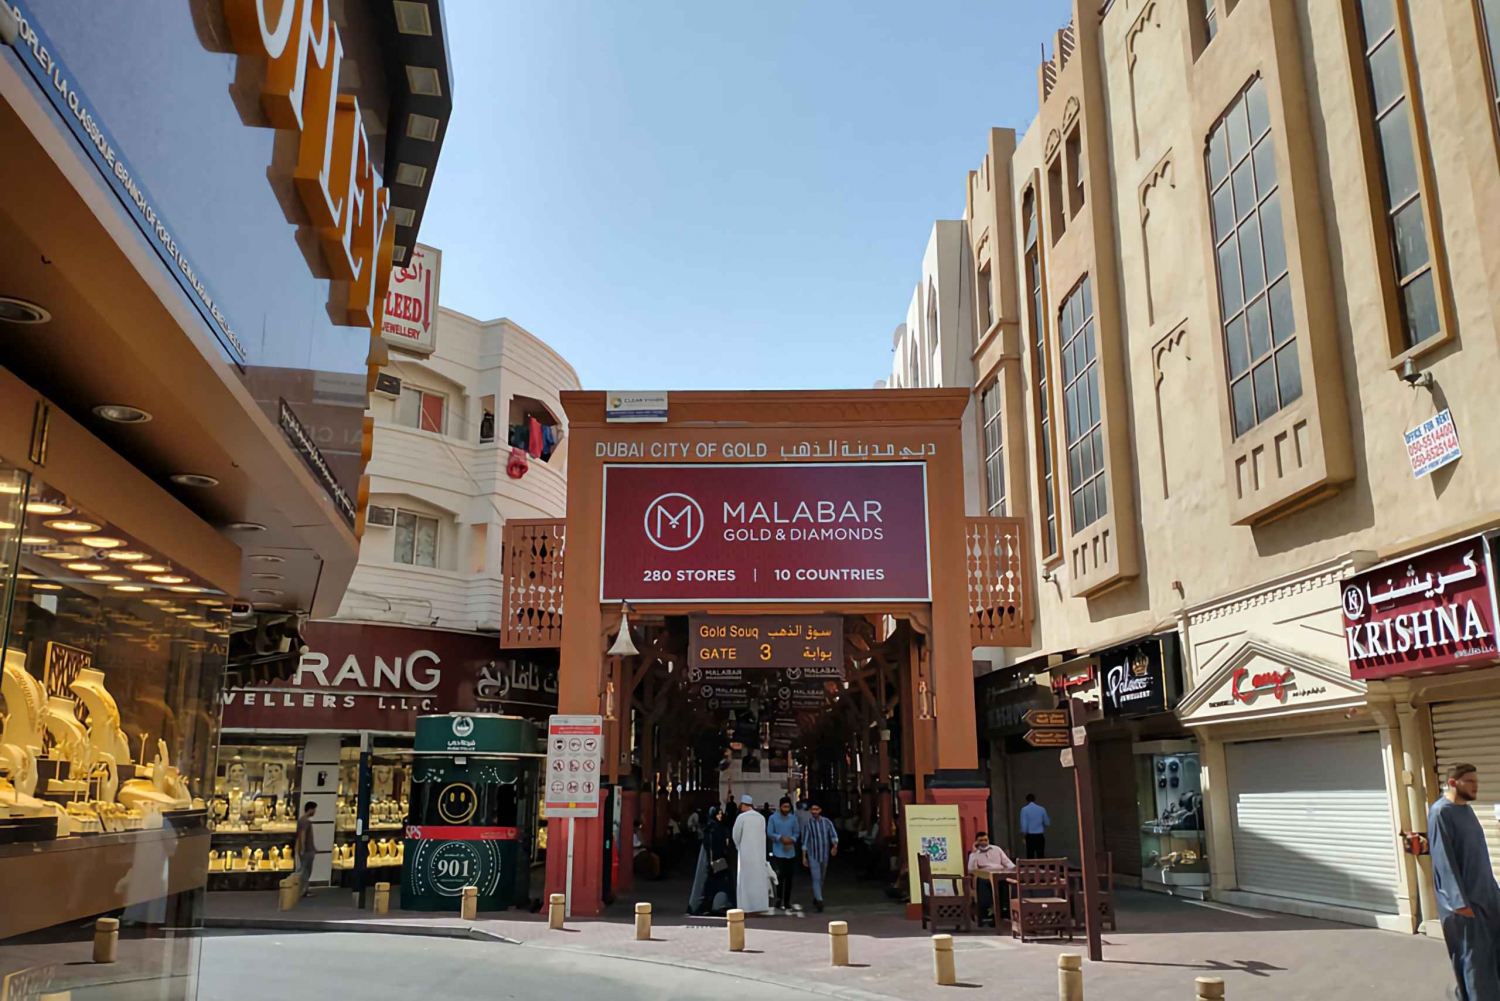 Walking Tour in Old Dubai Explor Heritage & Traditional Souq